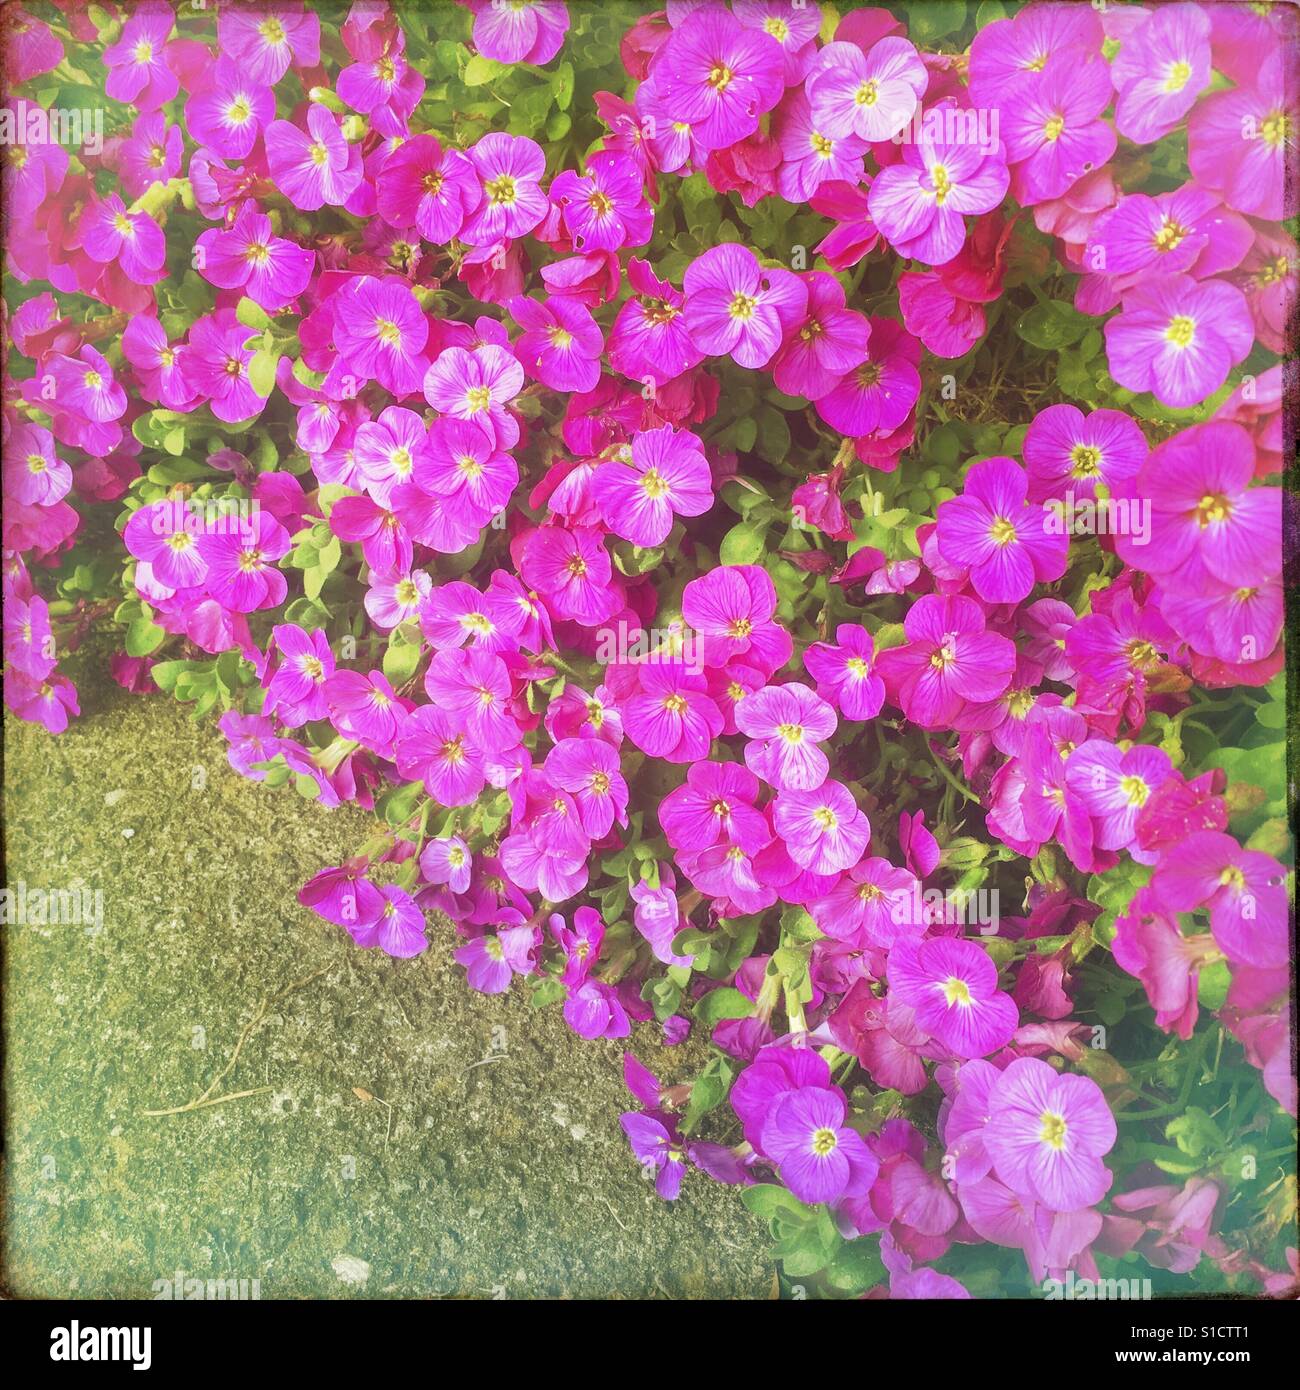 Aubrecia flowers Stock Photo